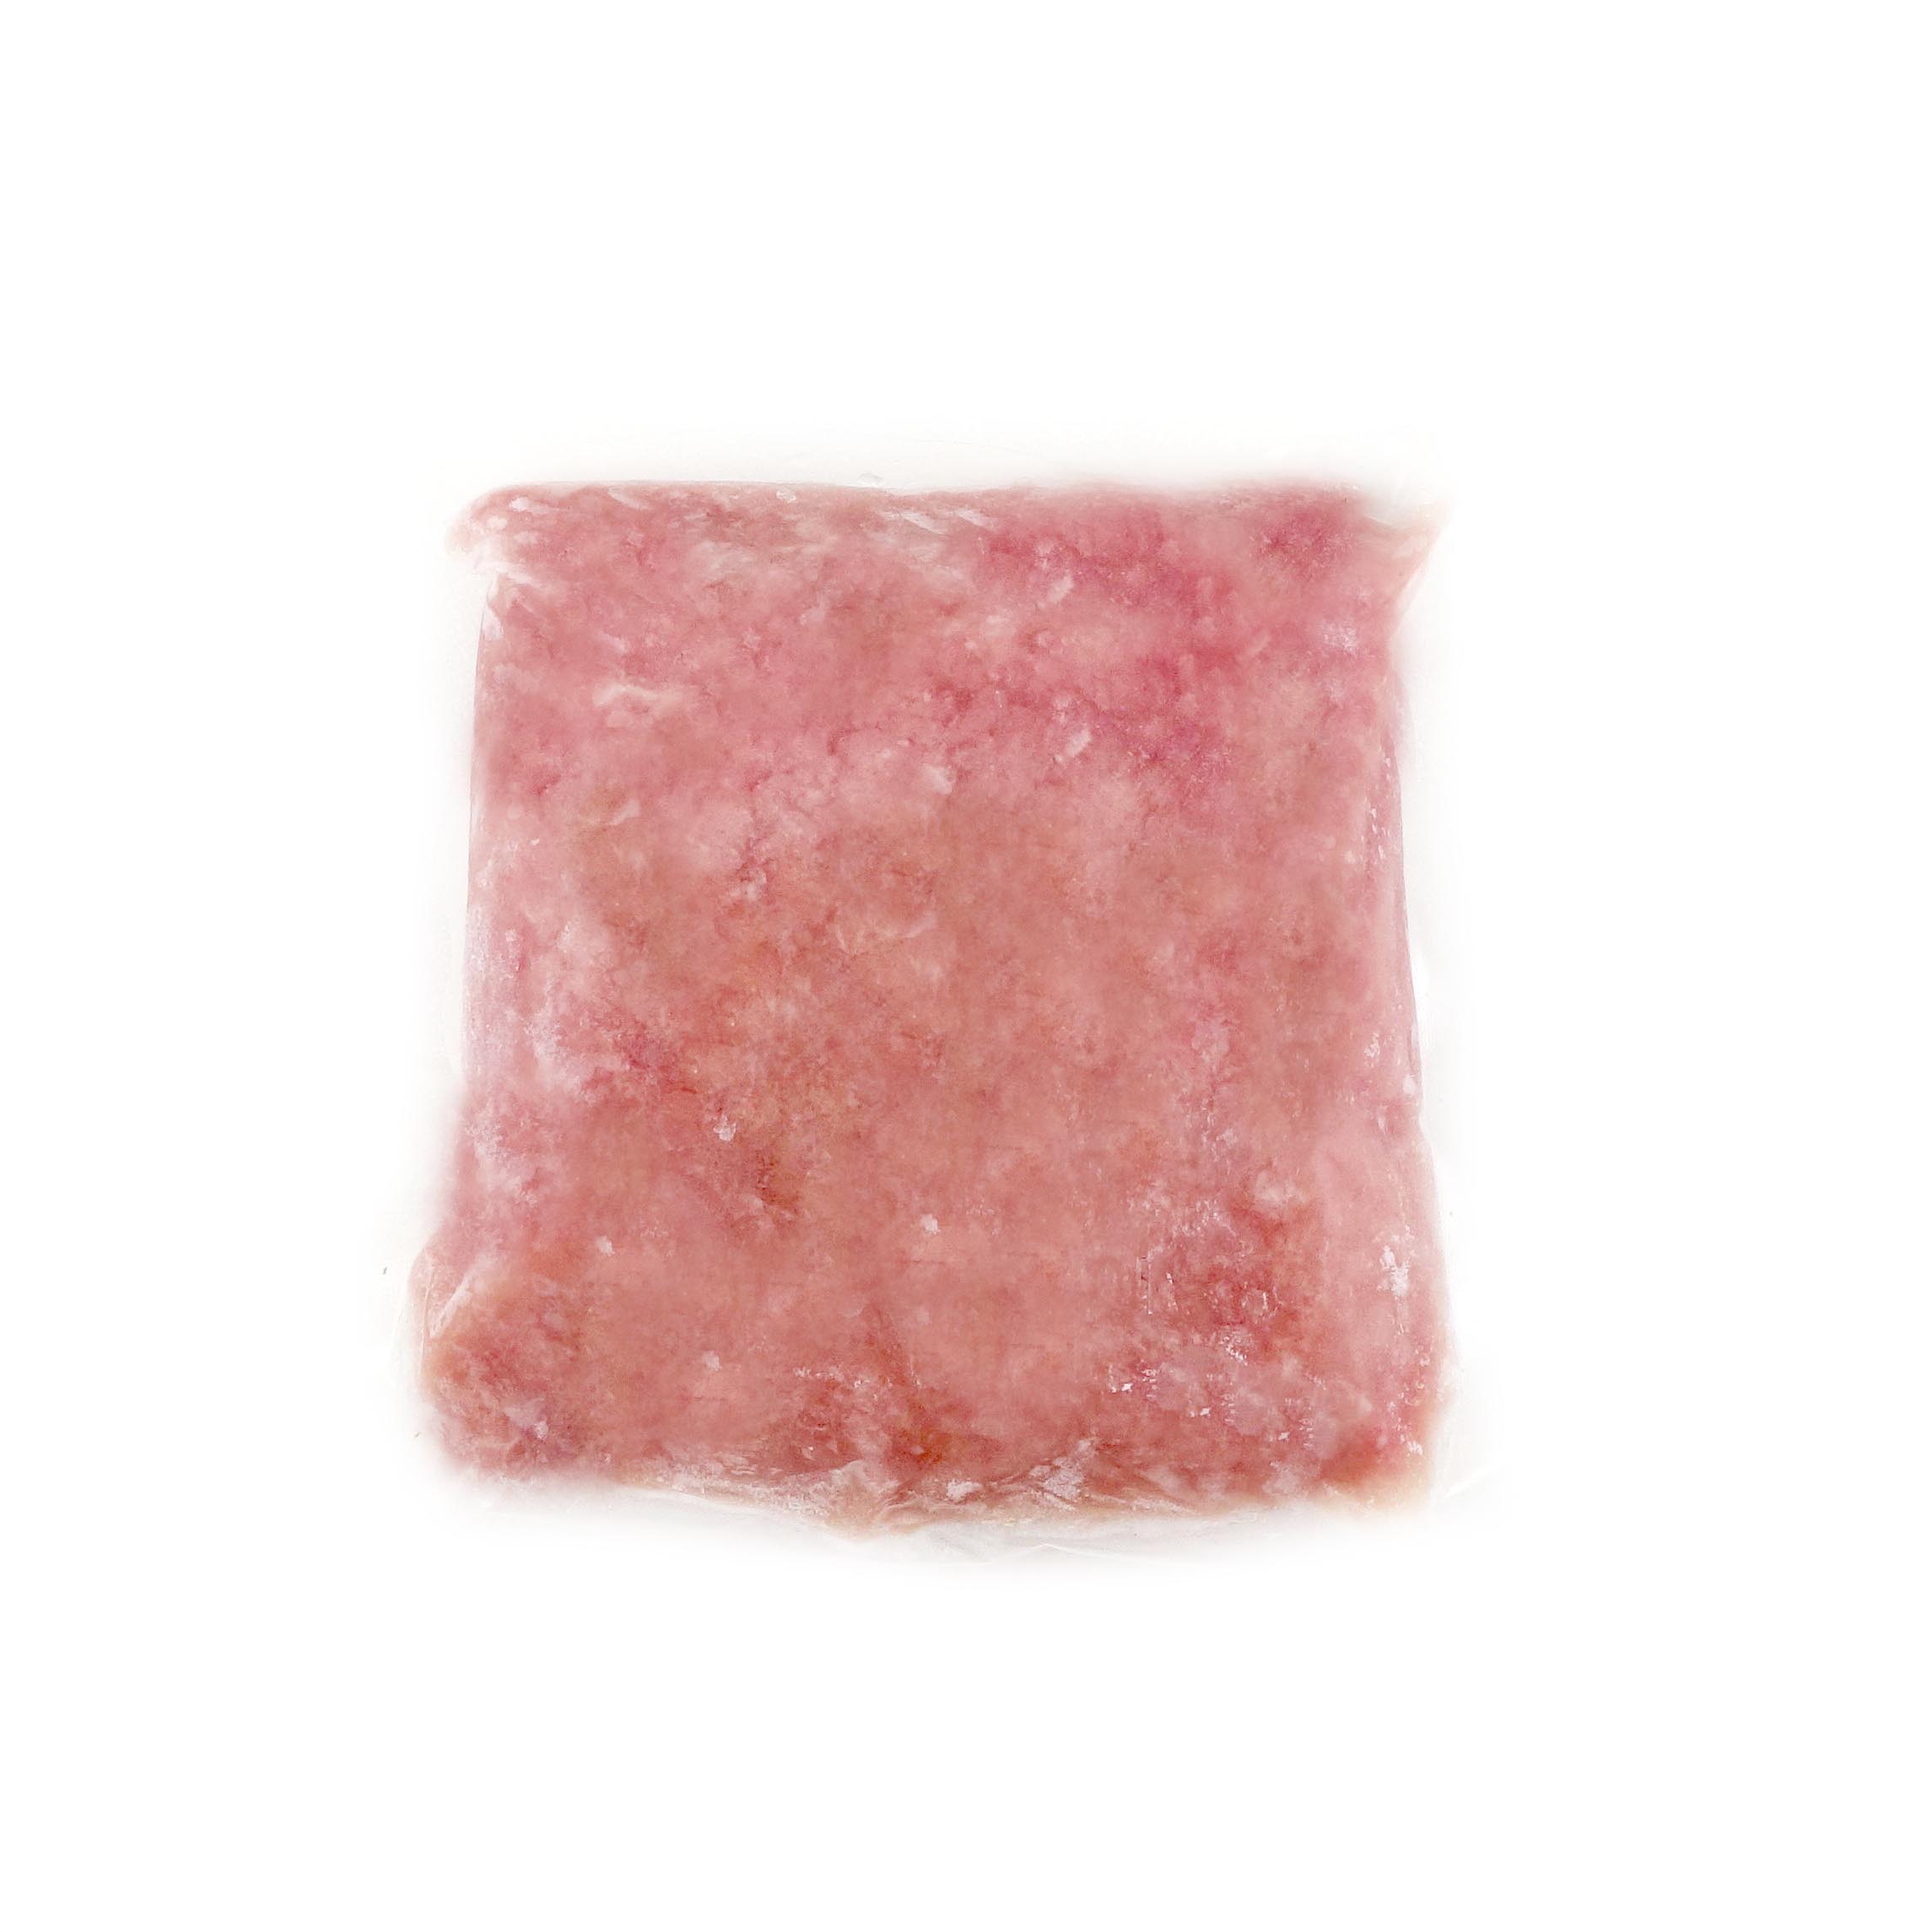 Frozen Aus Borrowdale Pork Mince (baby size) 100g*